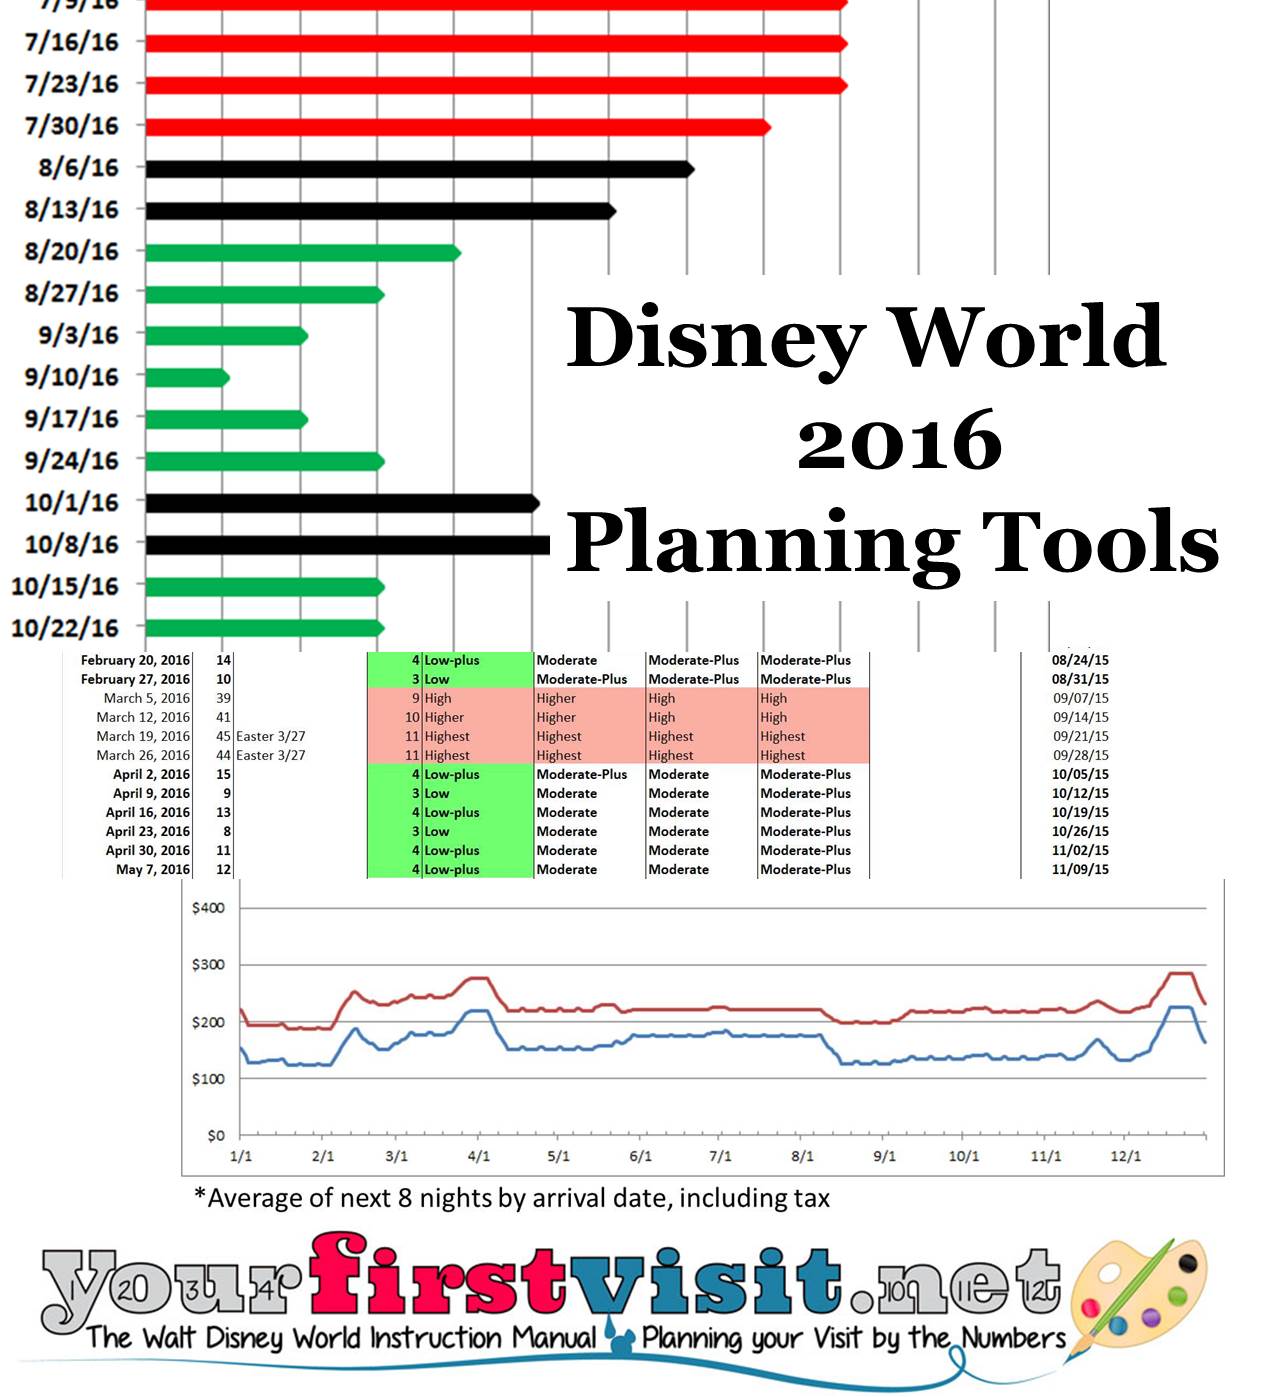 2016 Planning Tools for Walt Disney World